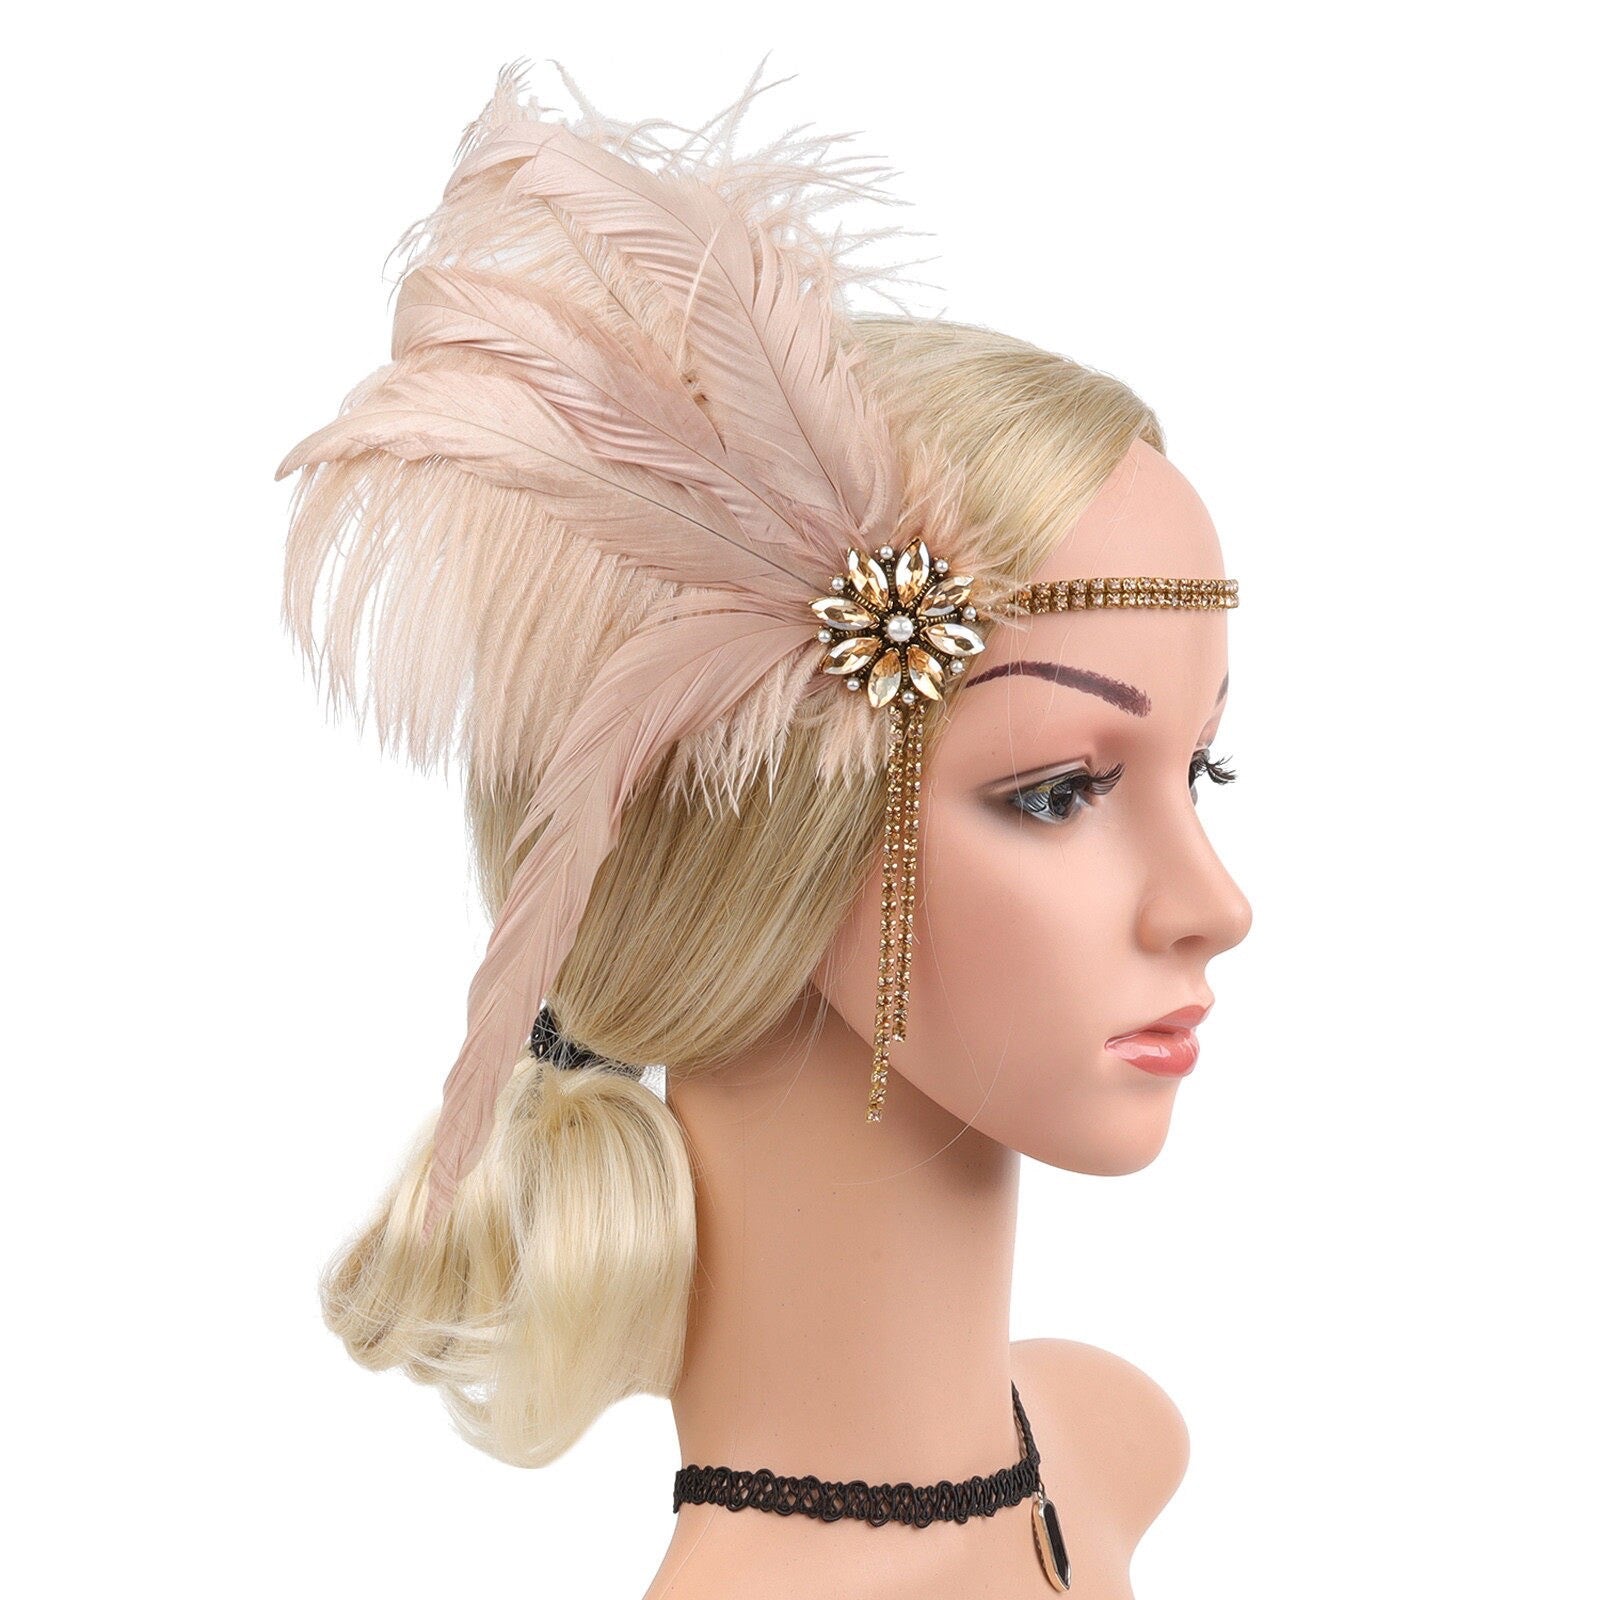 Great Gatsby 1920's Flapper Feather Headdress Fancy Dress - Champagne (Style 33)